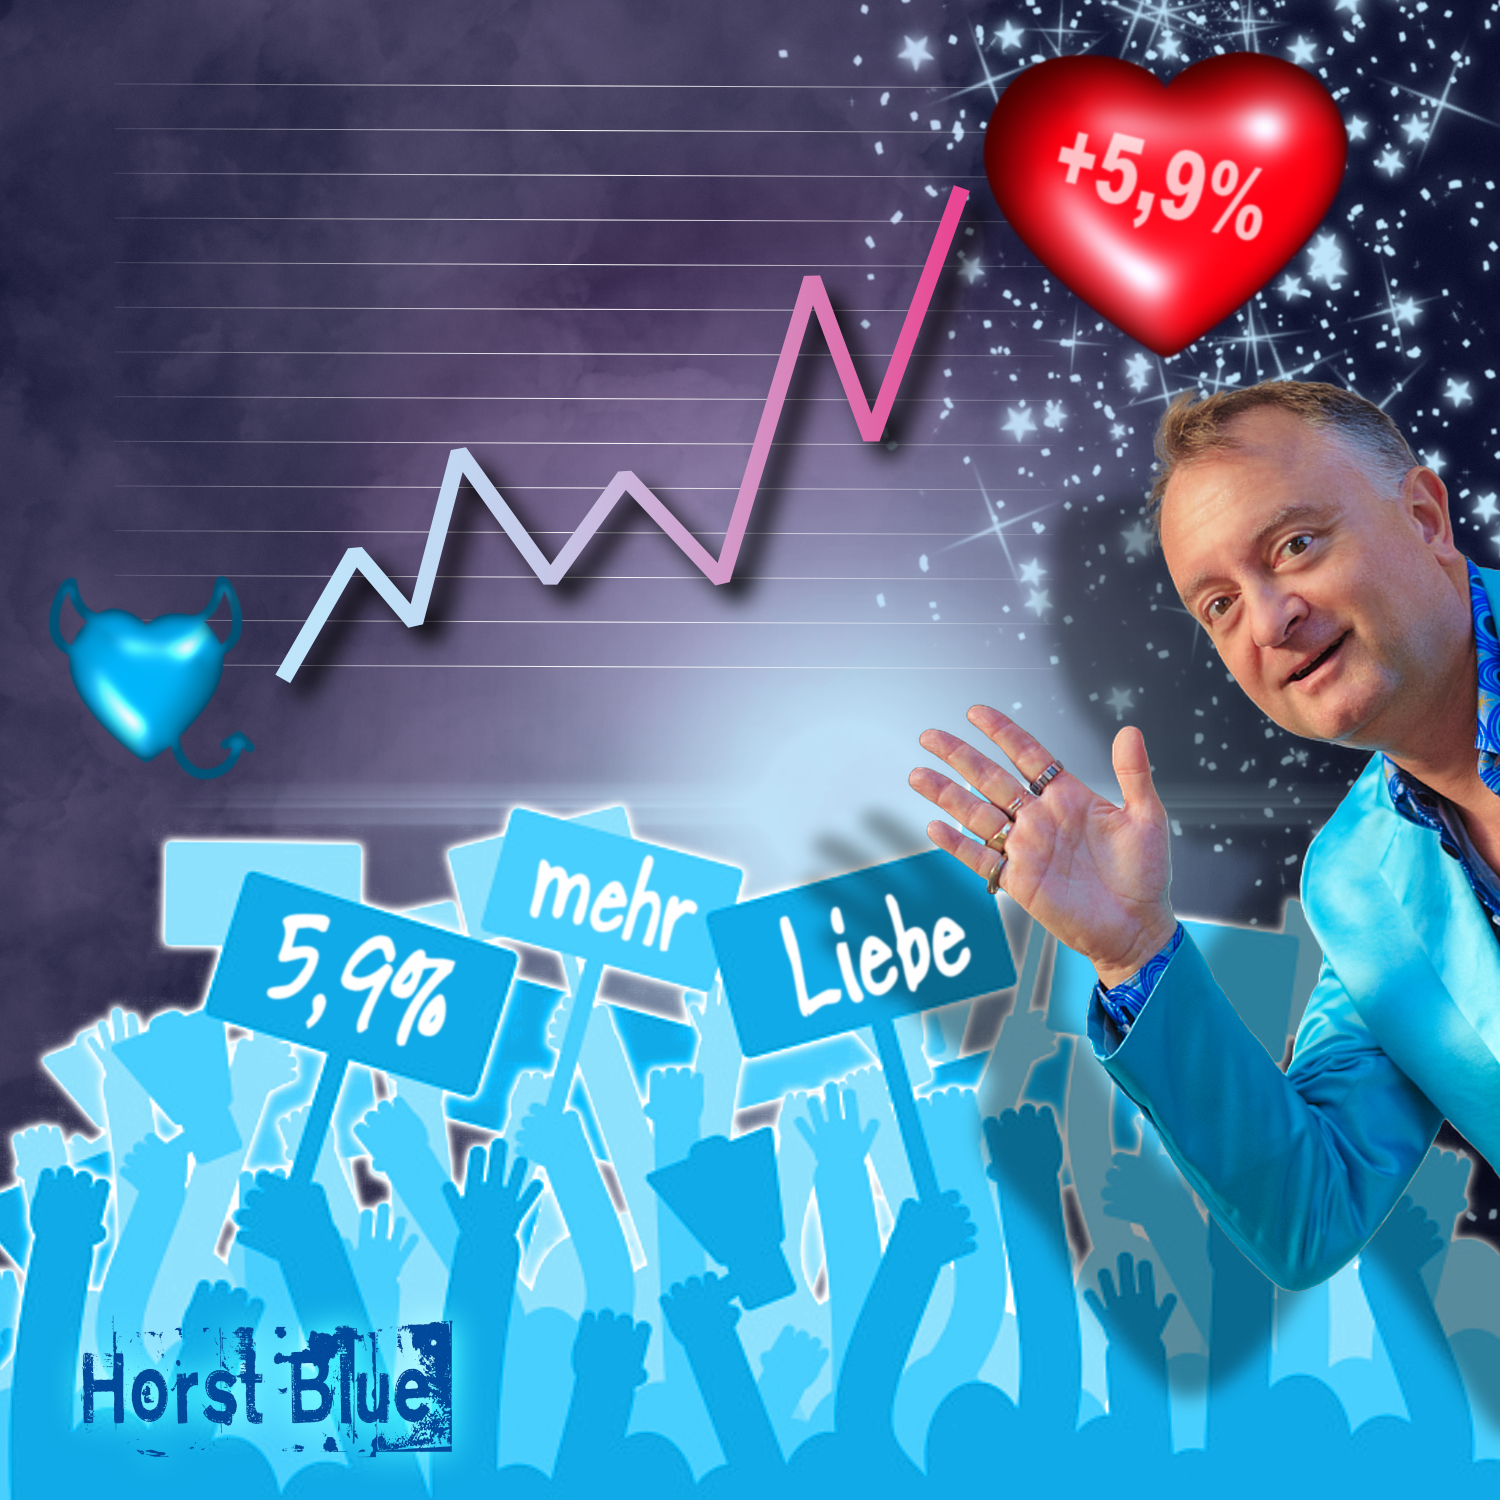 Horst Blue - 5,9  mehr Liebe - Cover.jpg